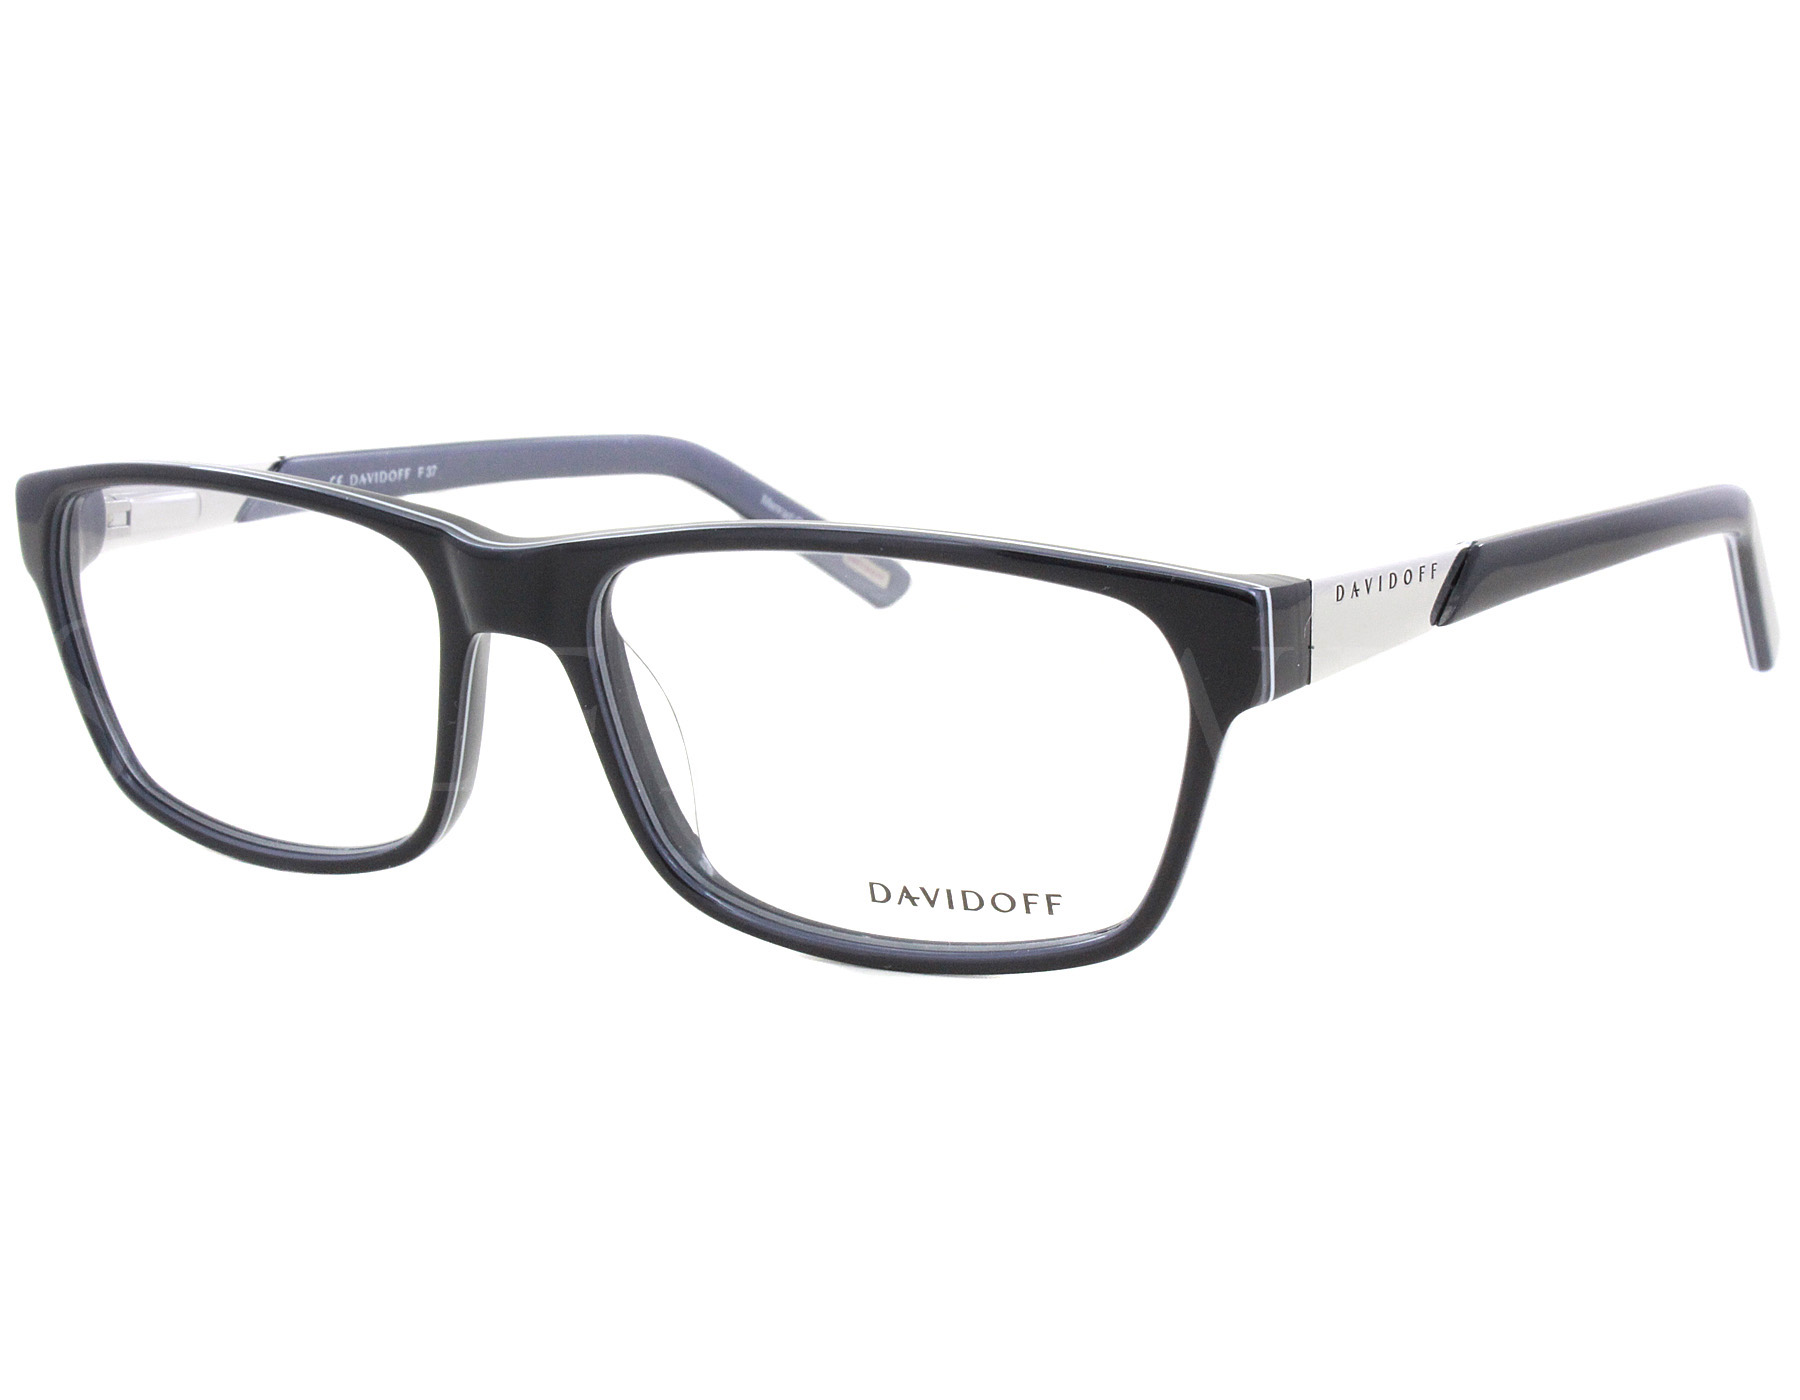 NEW Davidoff DV 92024 6287 56mm Black Optical Eyeglasses Frames ...